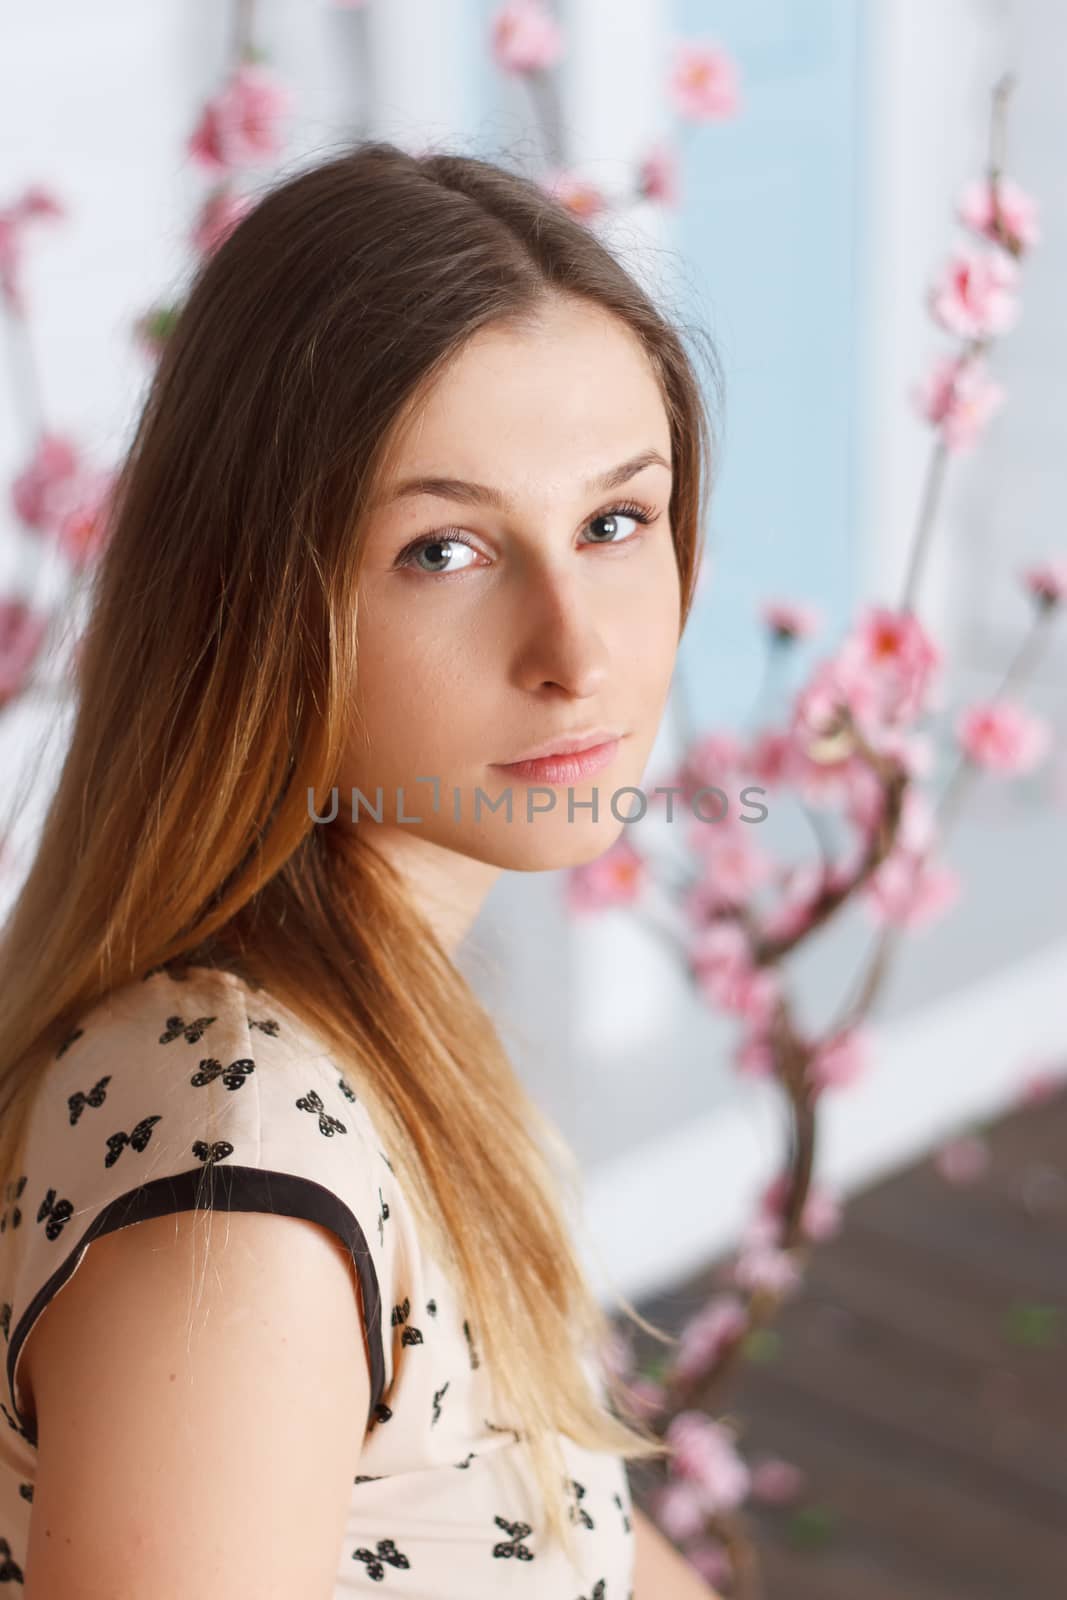 Beautiful girl with long hair in a flowering garden